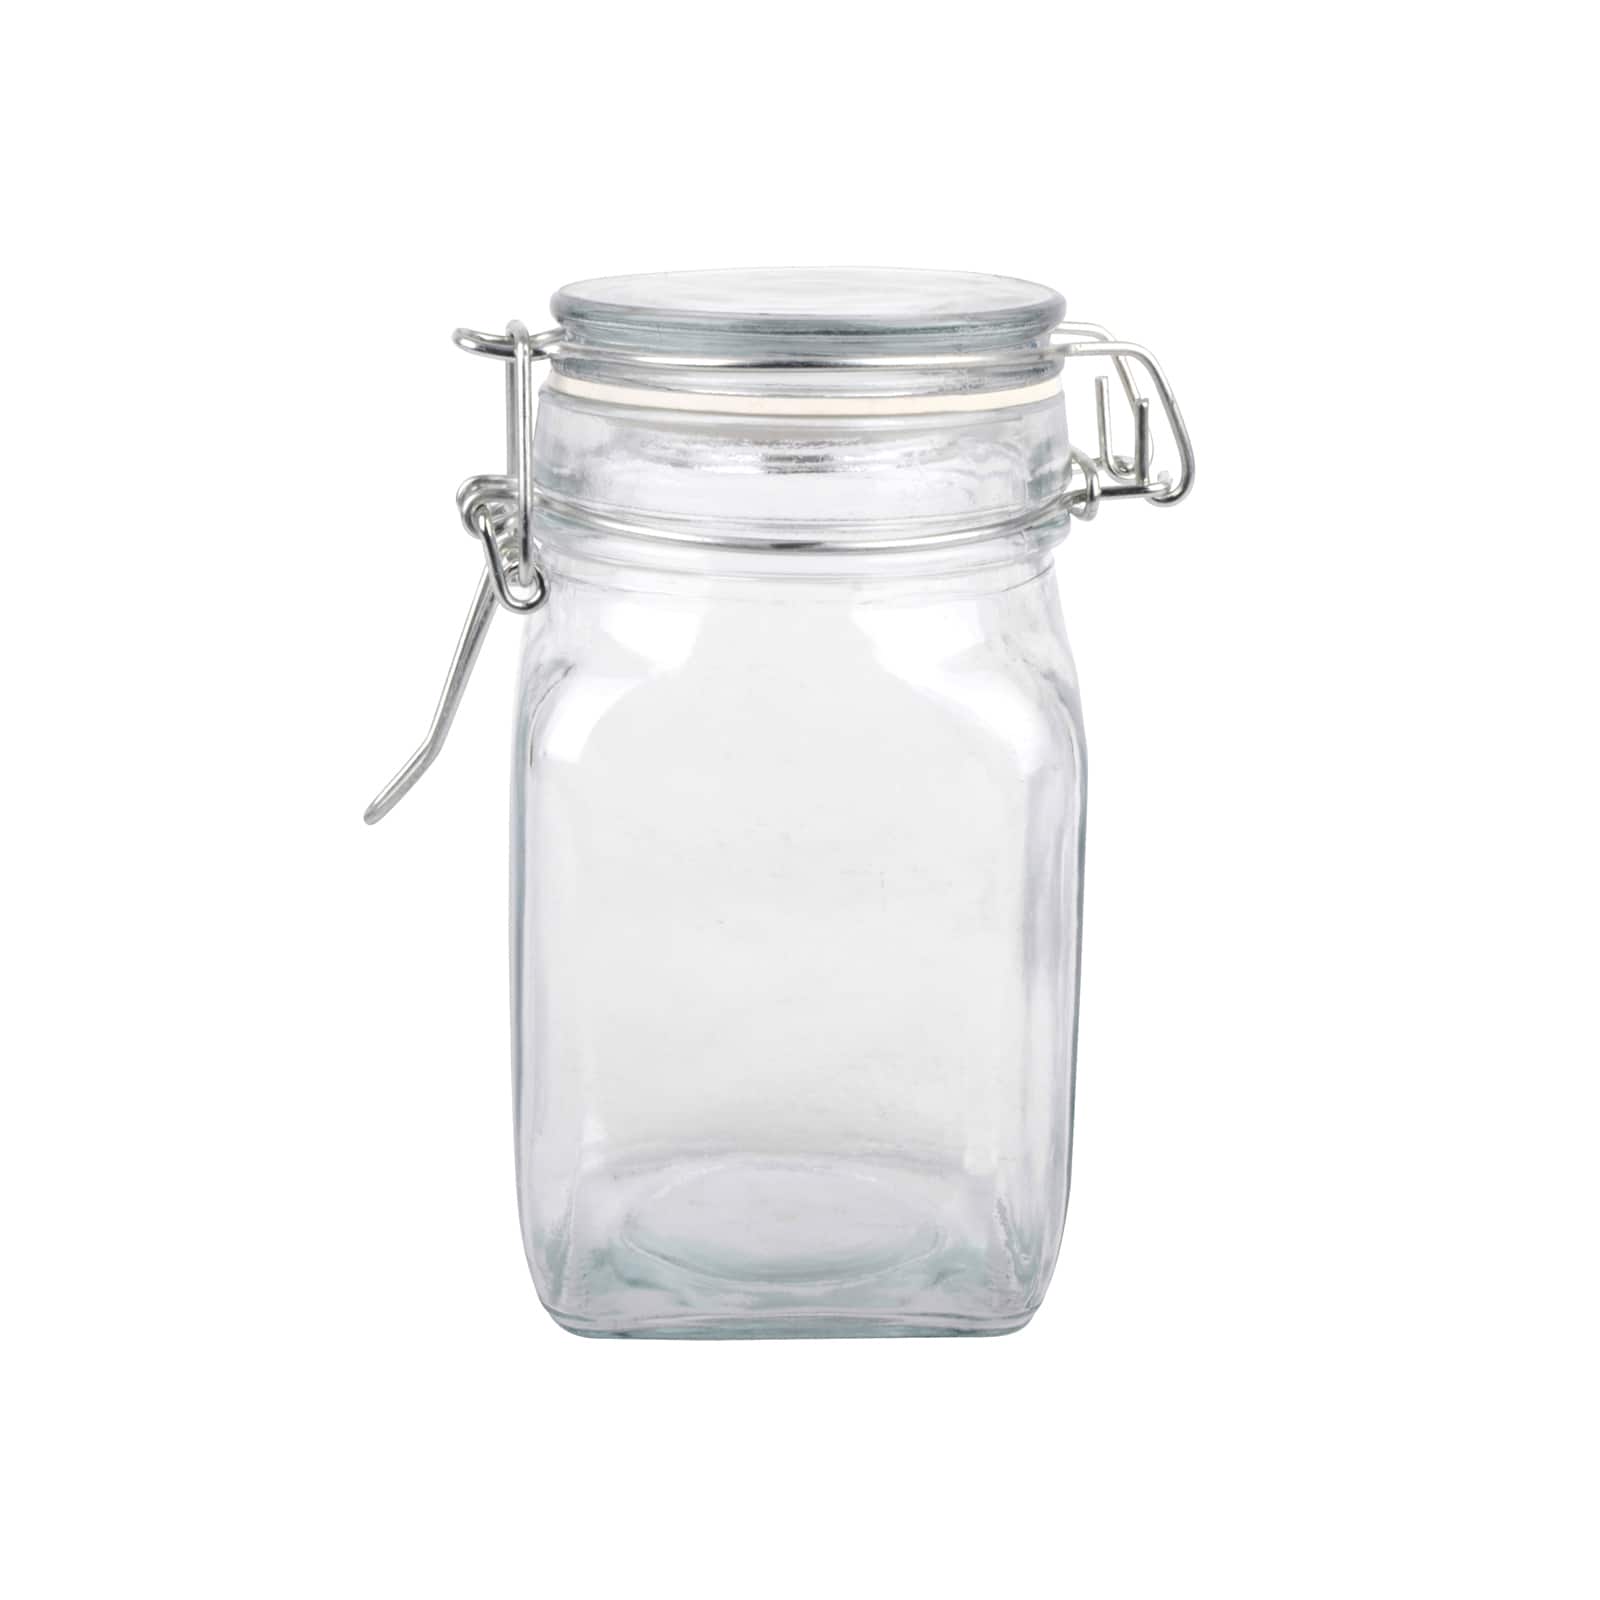 Glass Jar Reusable Decorative with Lid Airtight Jar for Candy